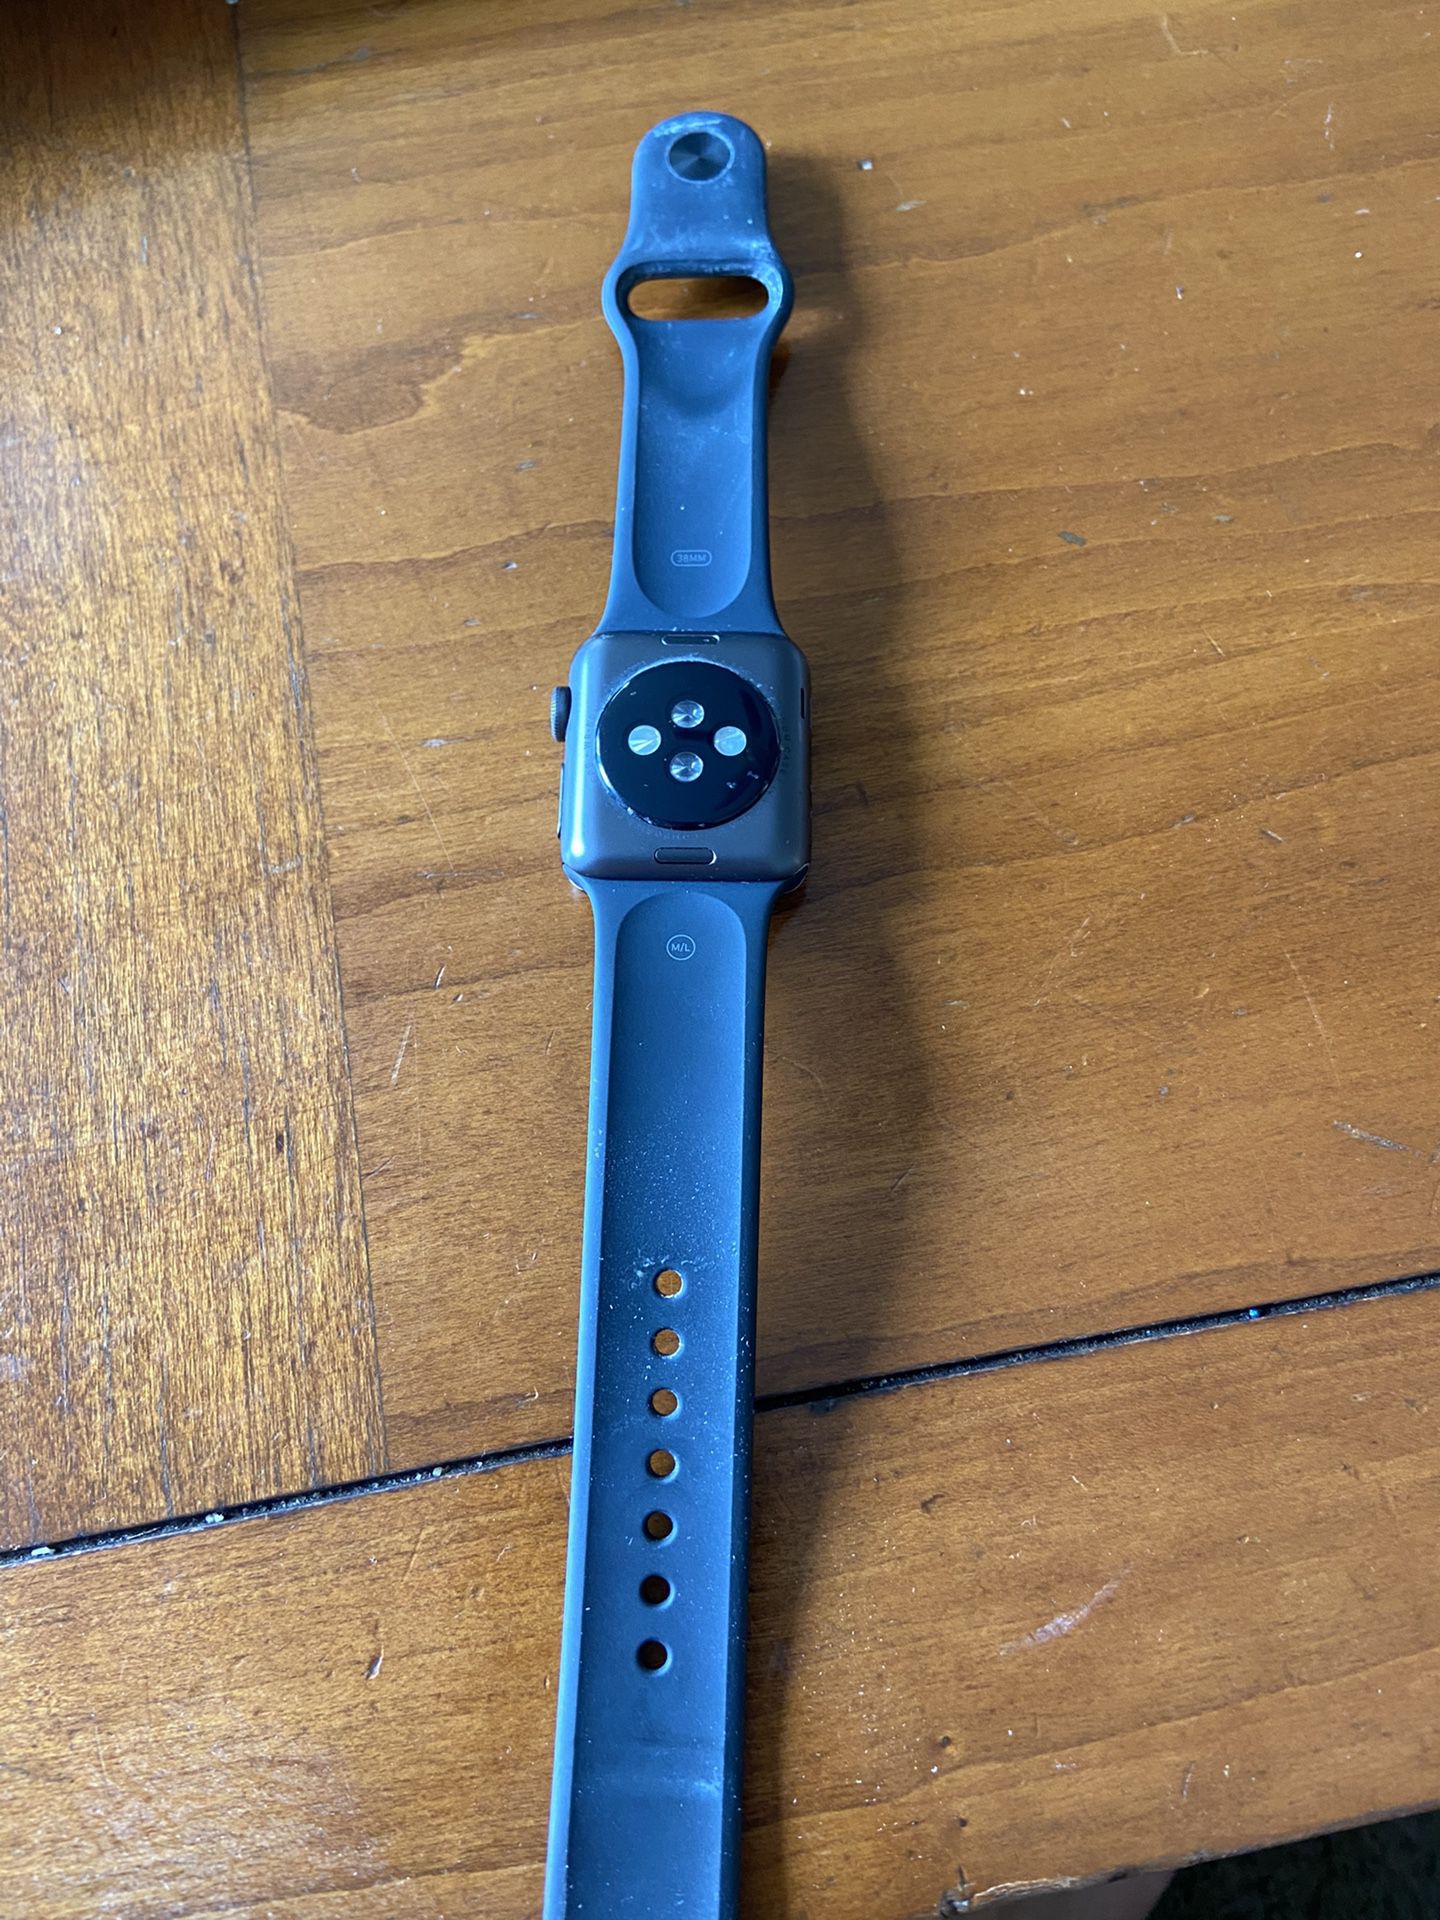 Apple Watch Series 3 (38mm Black)